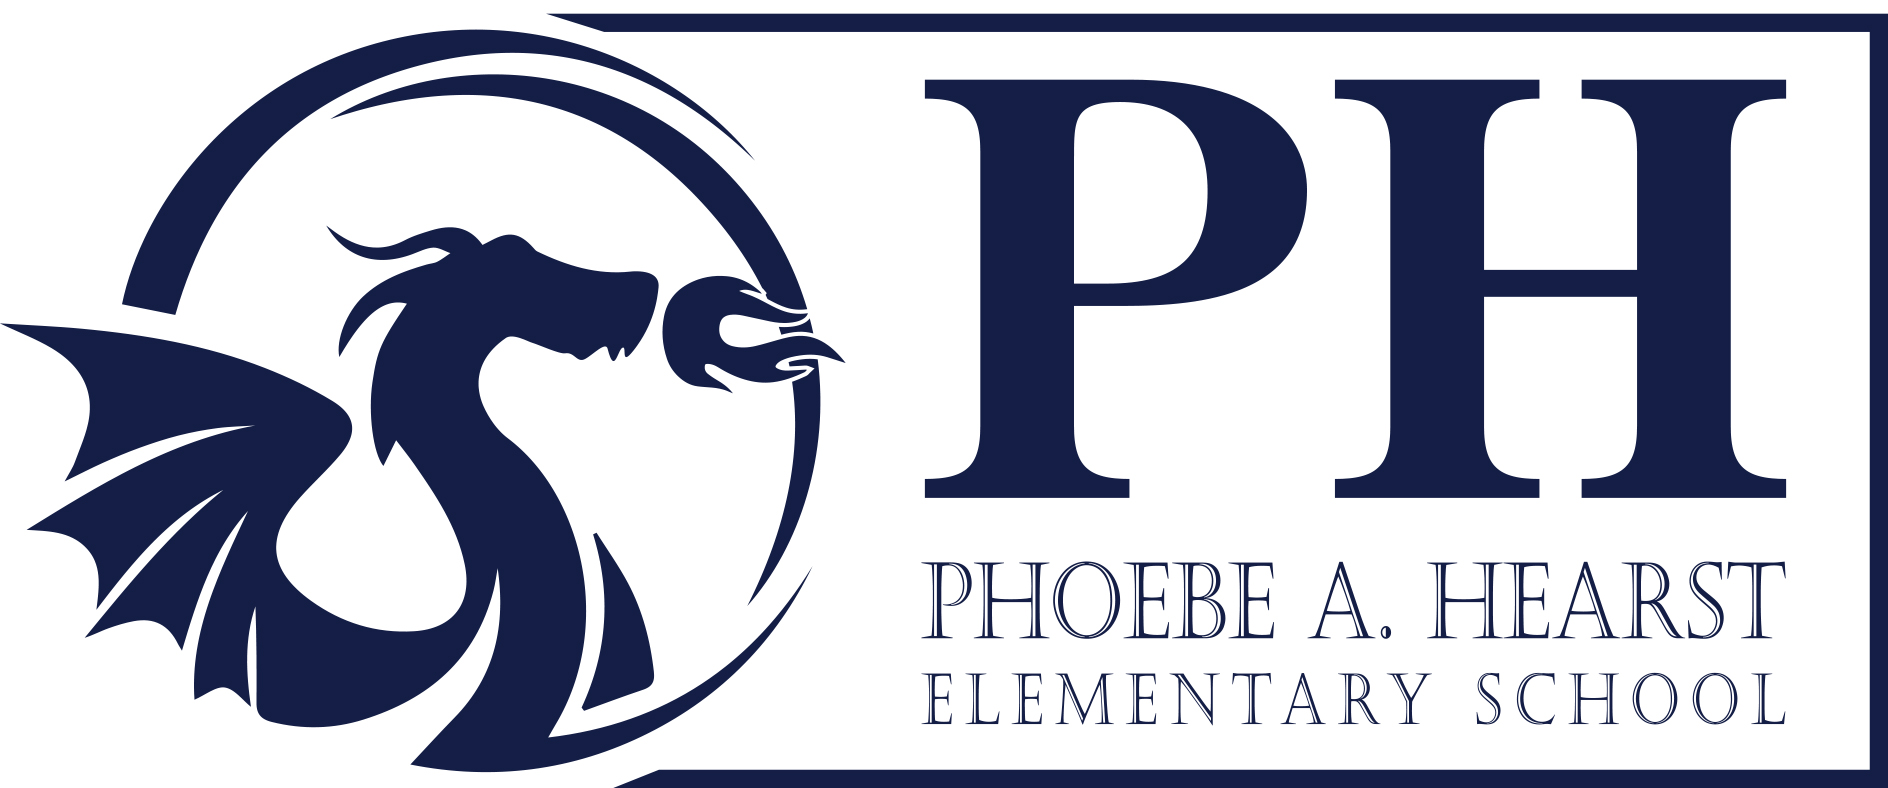 Phoebe A. Hearst Elementary School